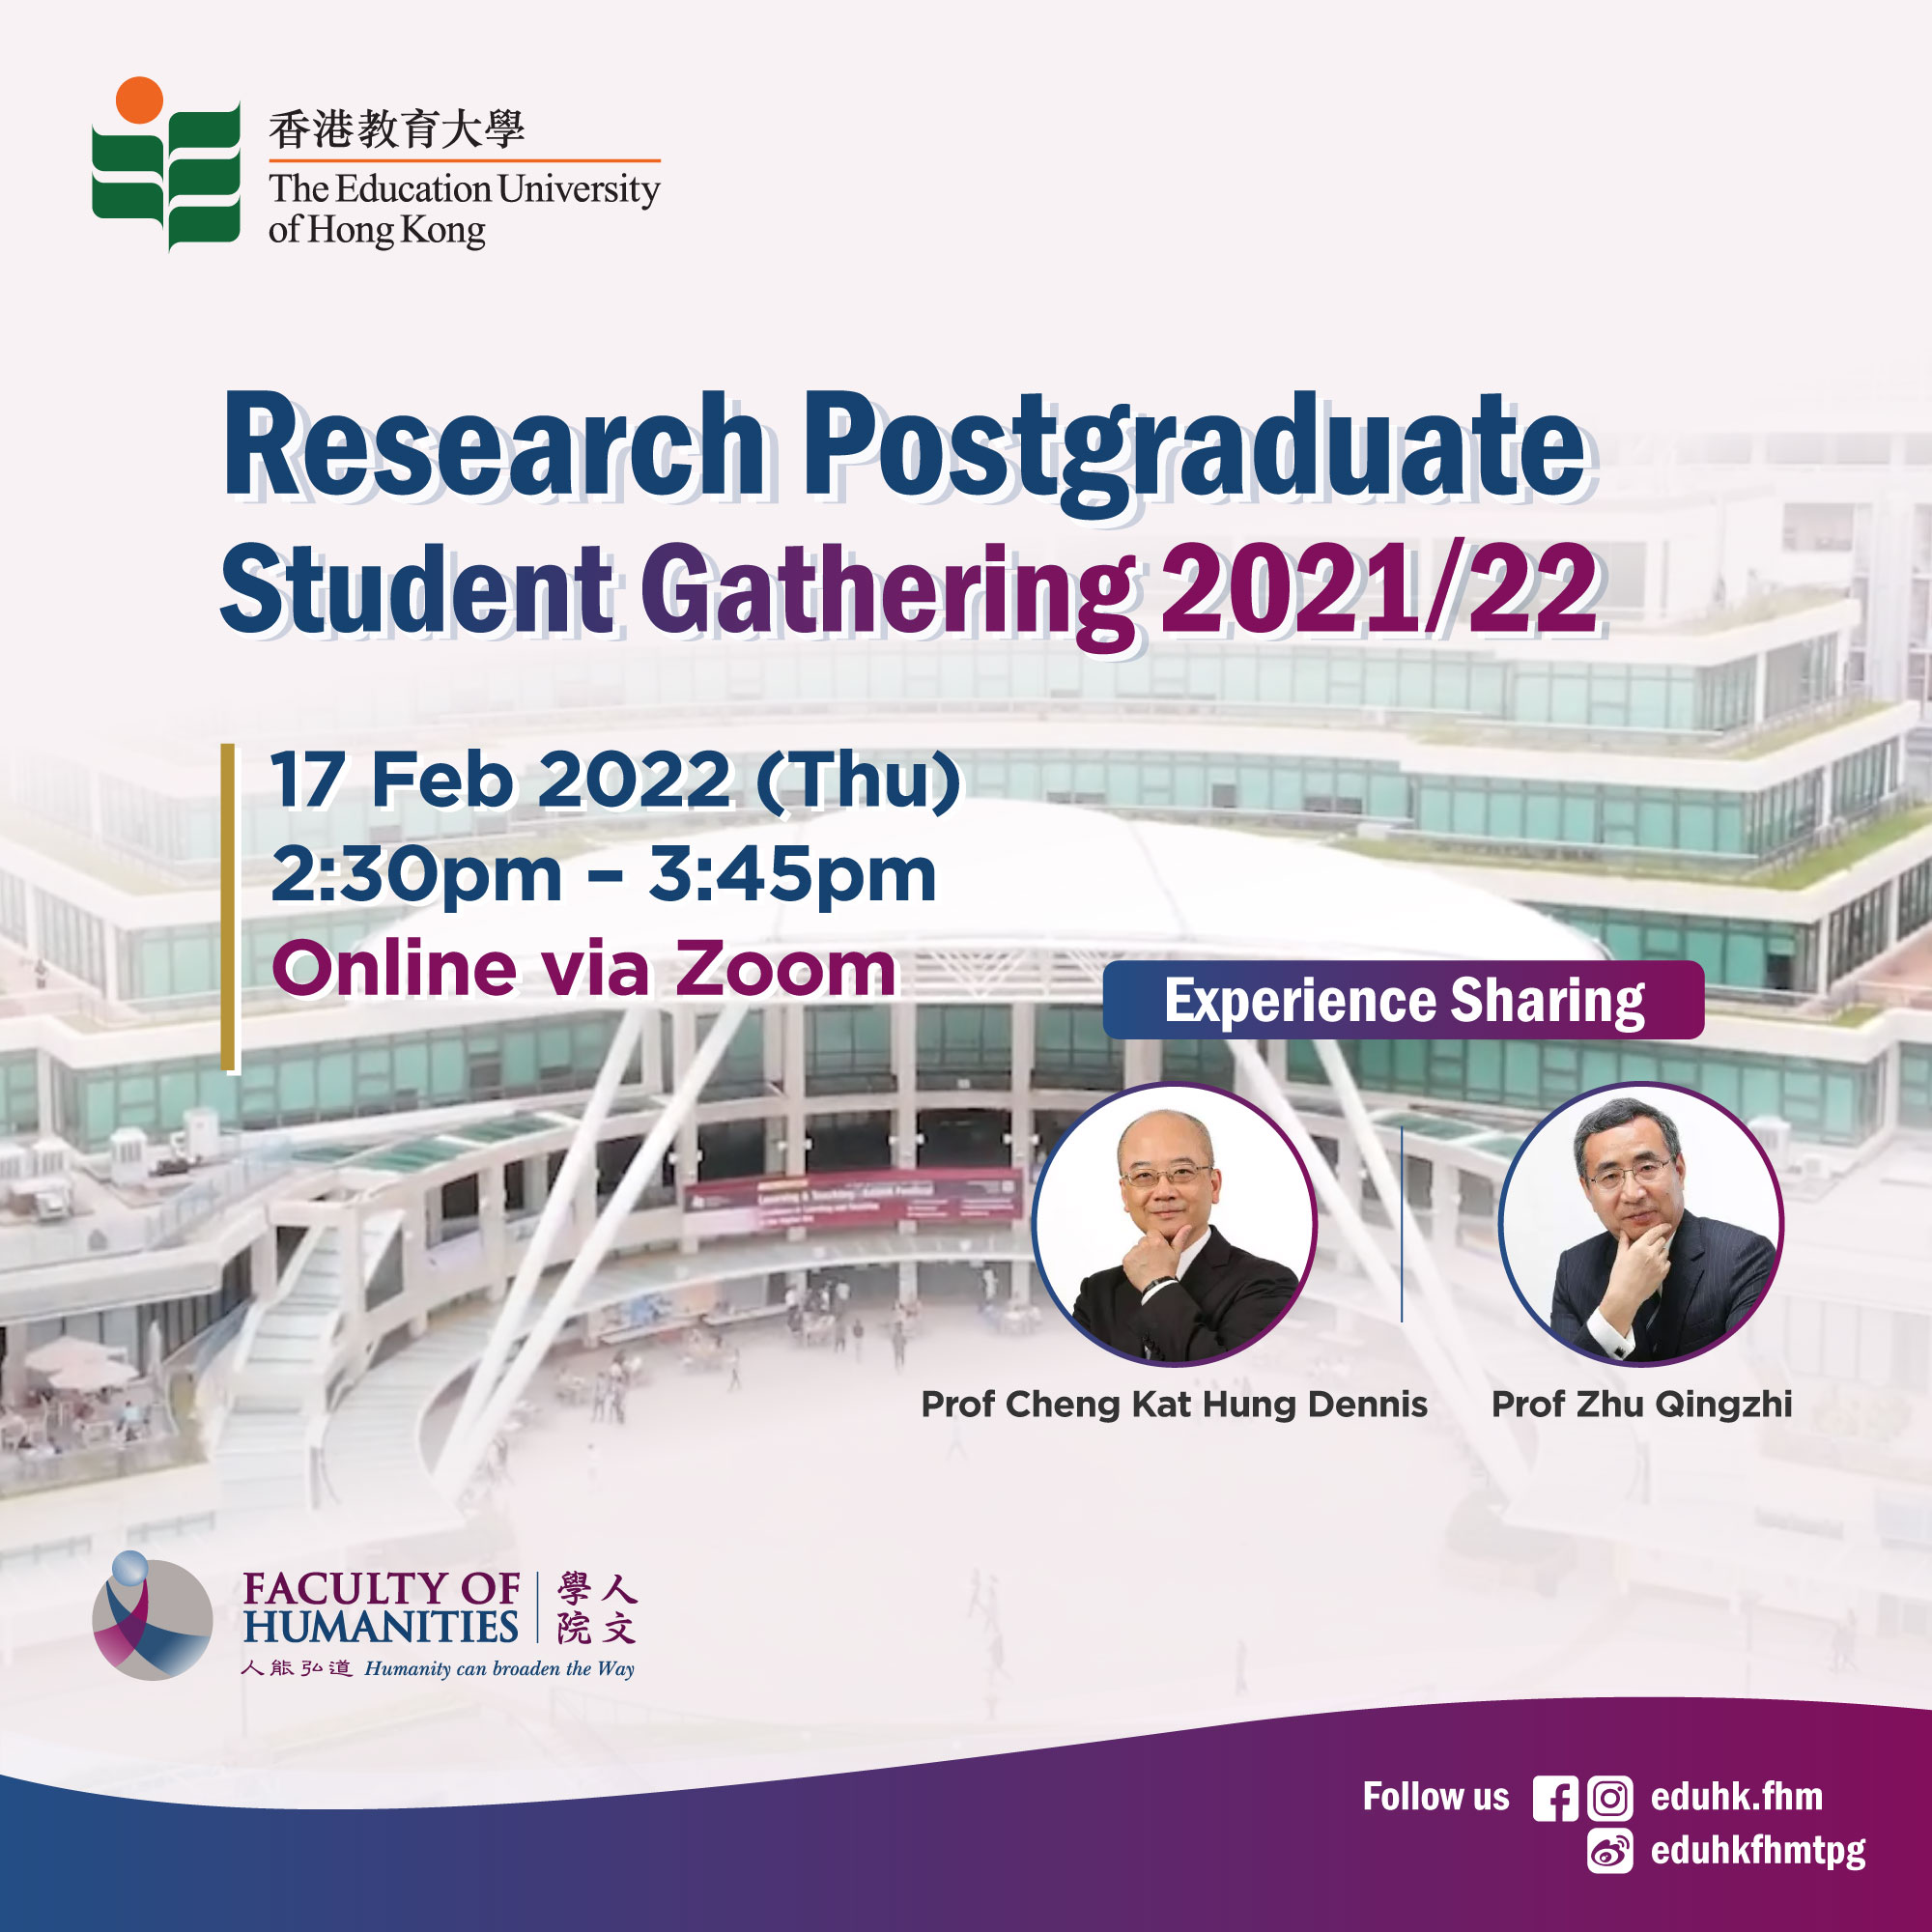 Research Postgraduate Student Gathering 2021/22